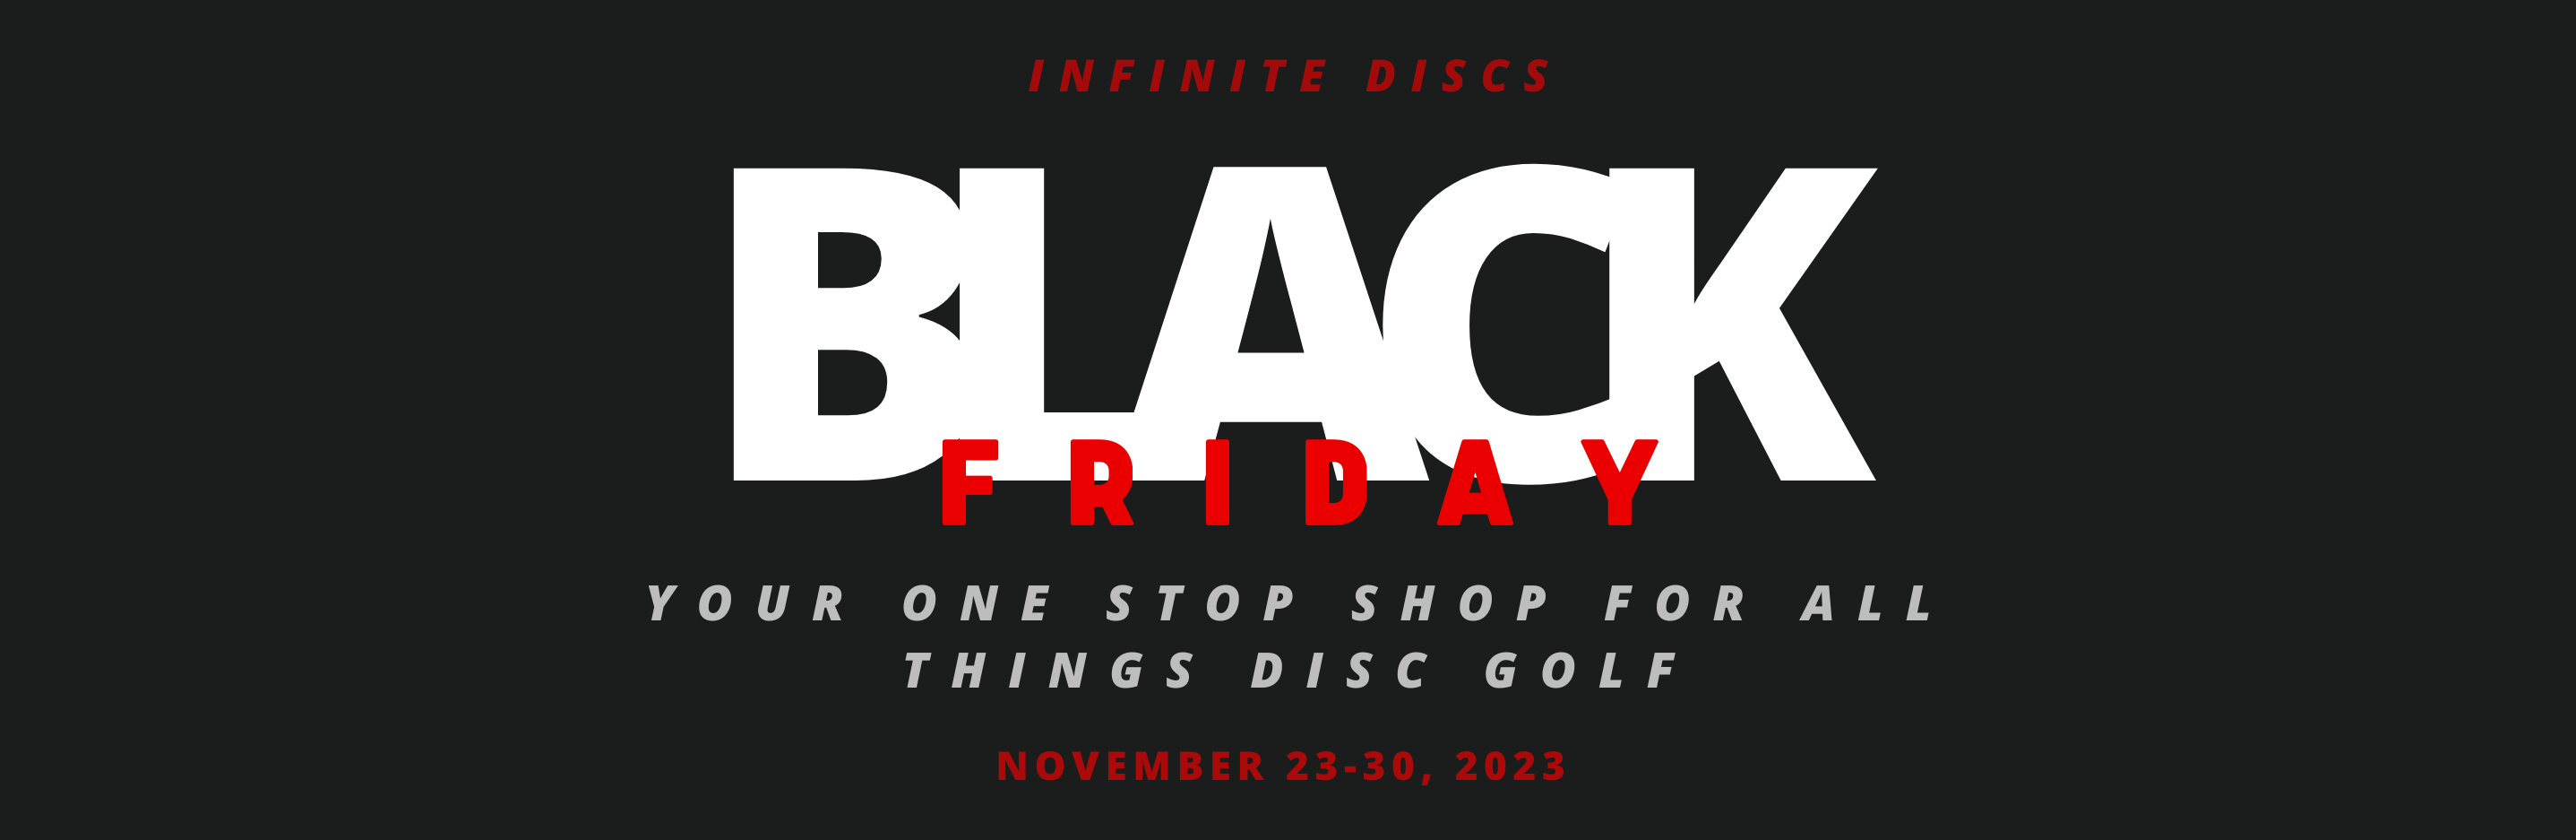 Black Friday Week/Cyber Monday Disc Golf Deals » Infinite Discs Blog